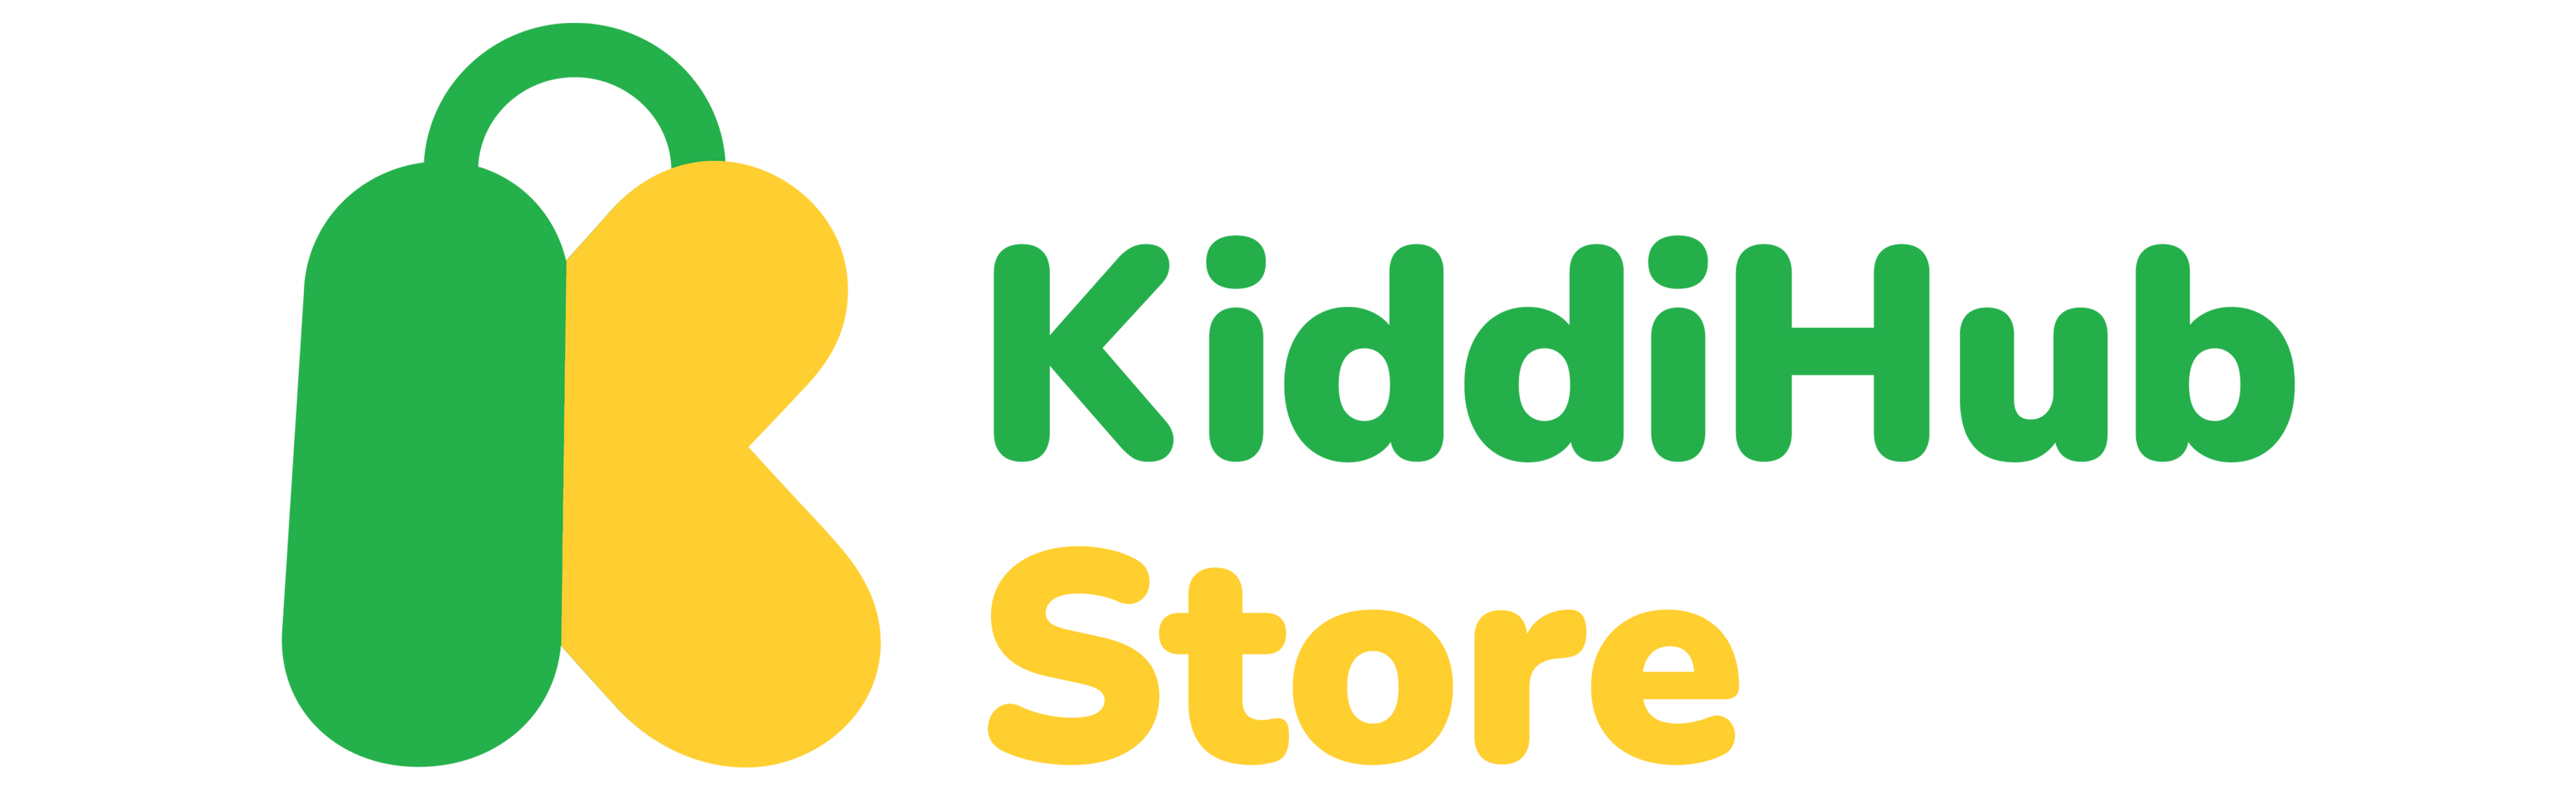 logo KIDDIHUB STORE